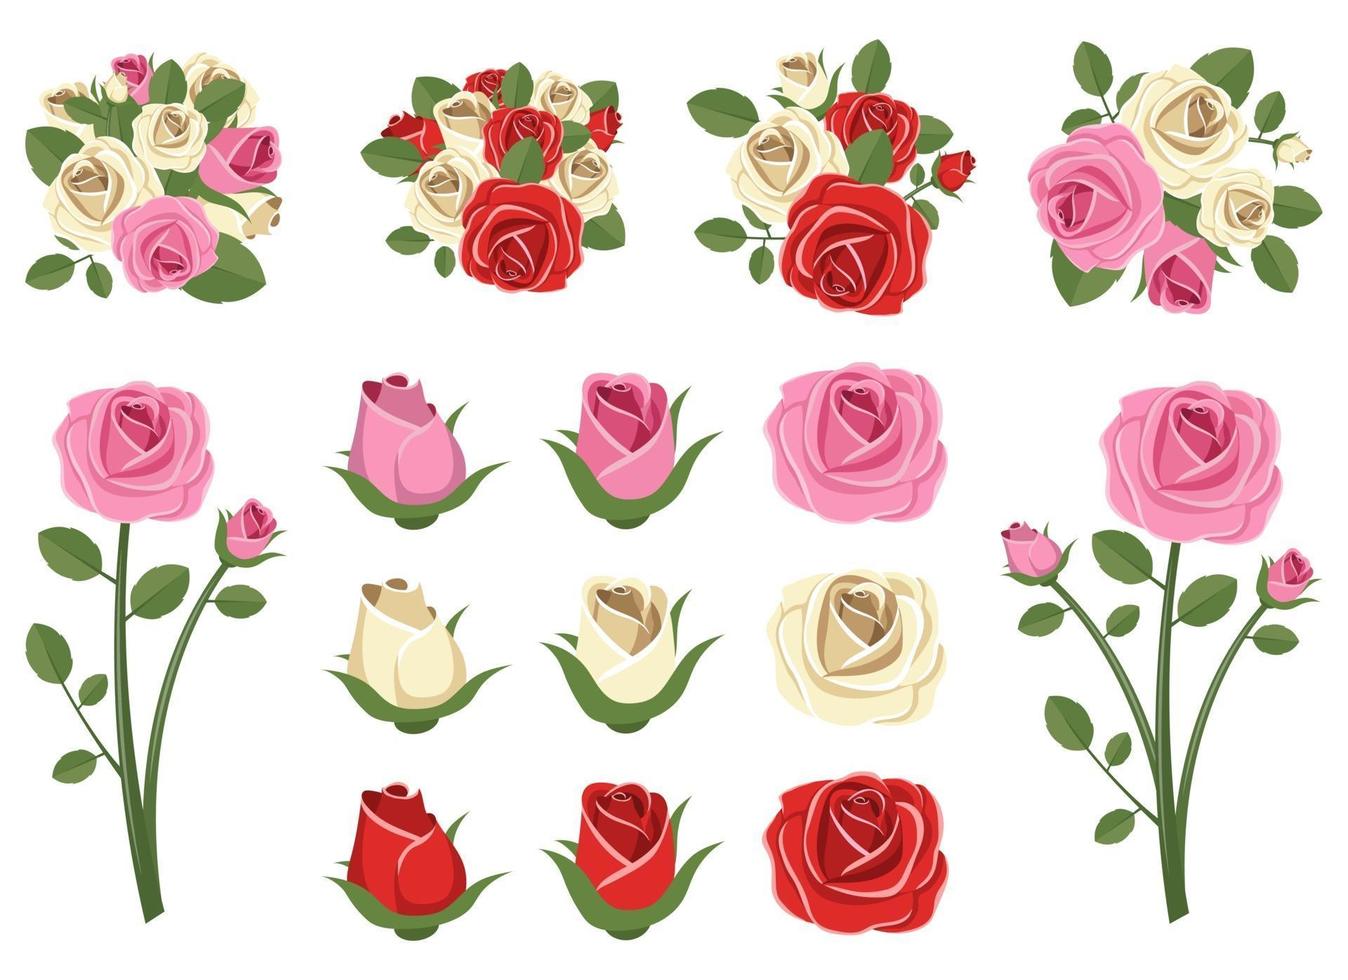 Vintage roses vector design illustration set isolated on white background